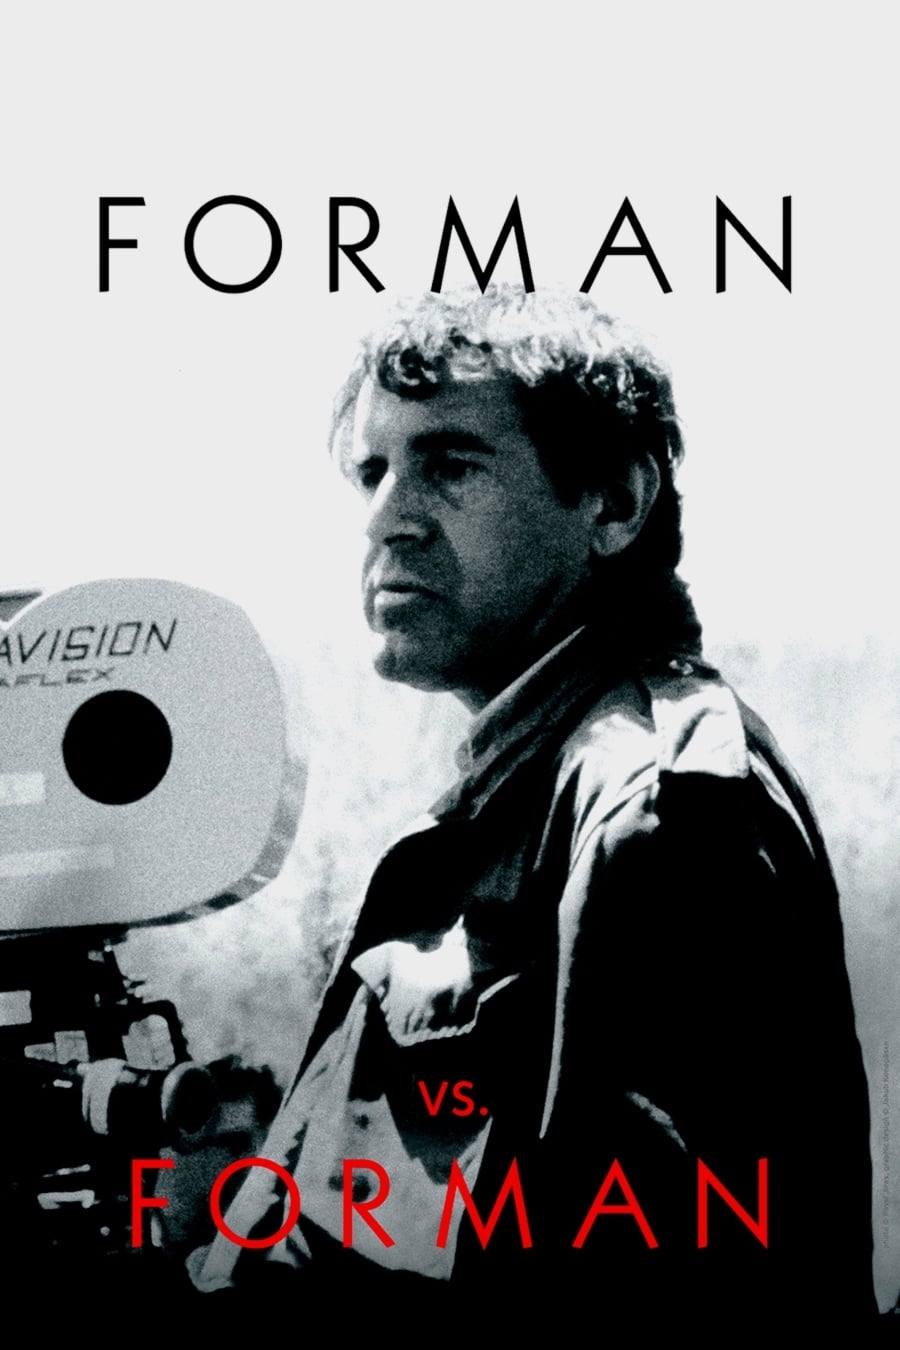 Forman vs. Forman